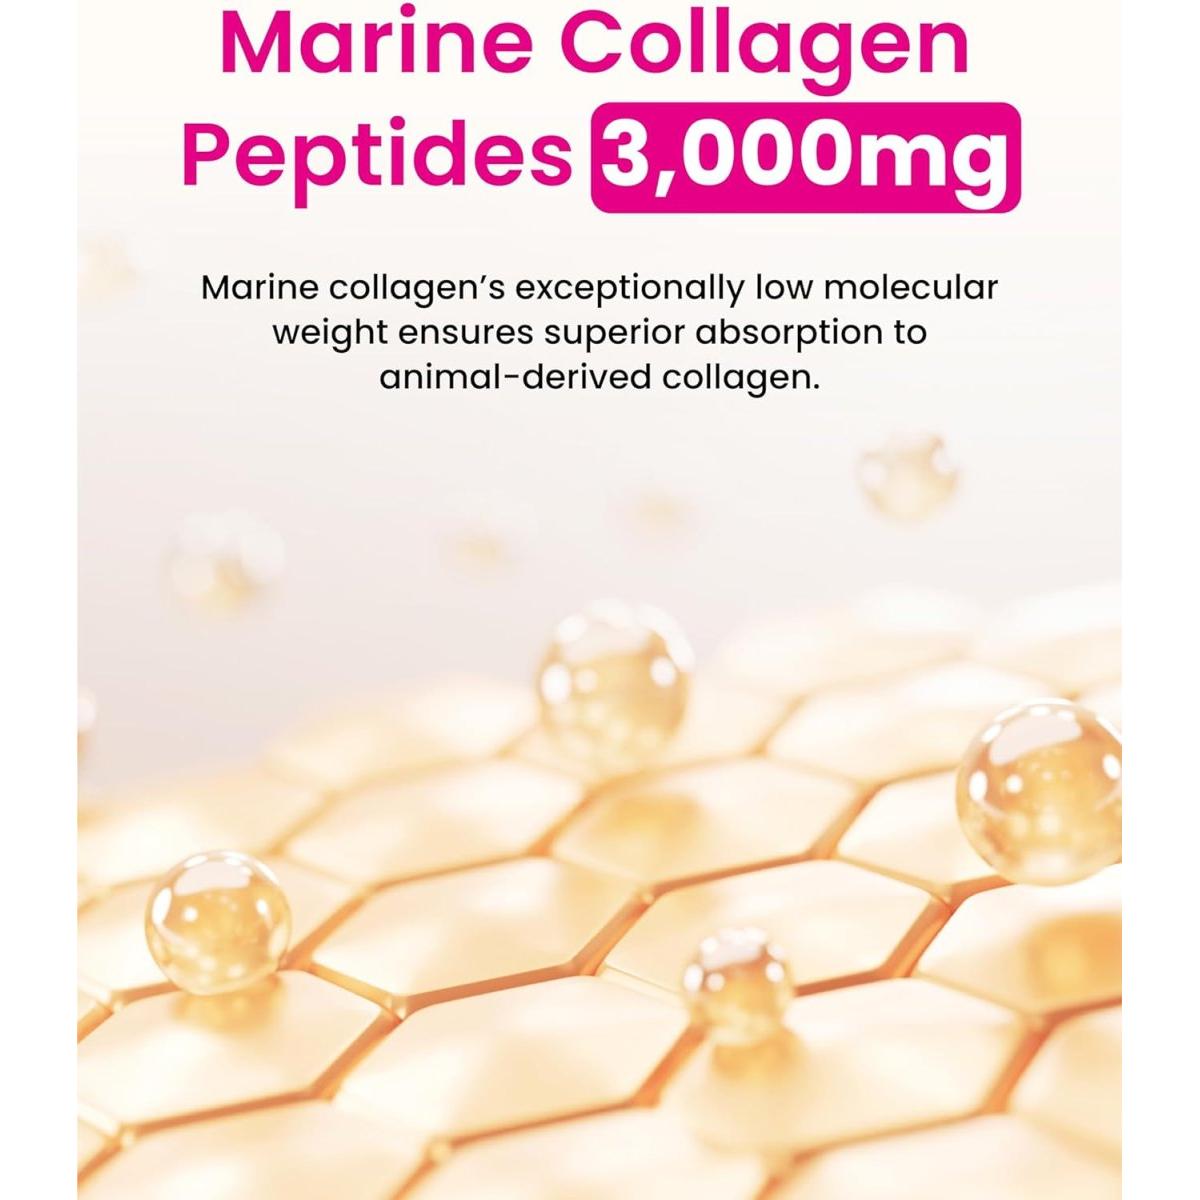 Glowshot Collagen - Low-Molecular-Weight Fish Collagen Shots 3,000Mg. (6 Bottles x 50ml) - Glam Global UK